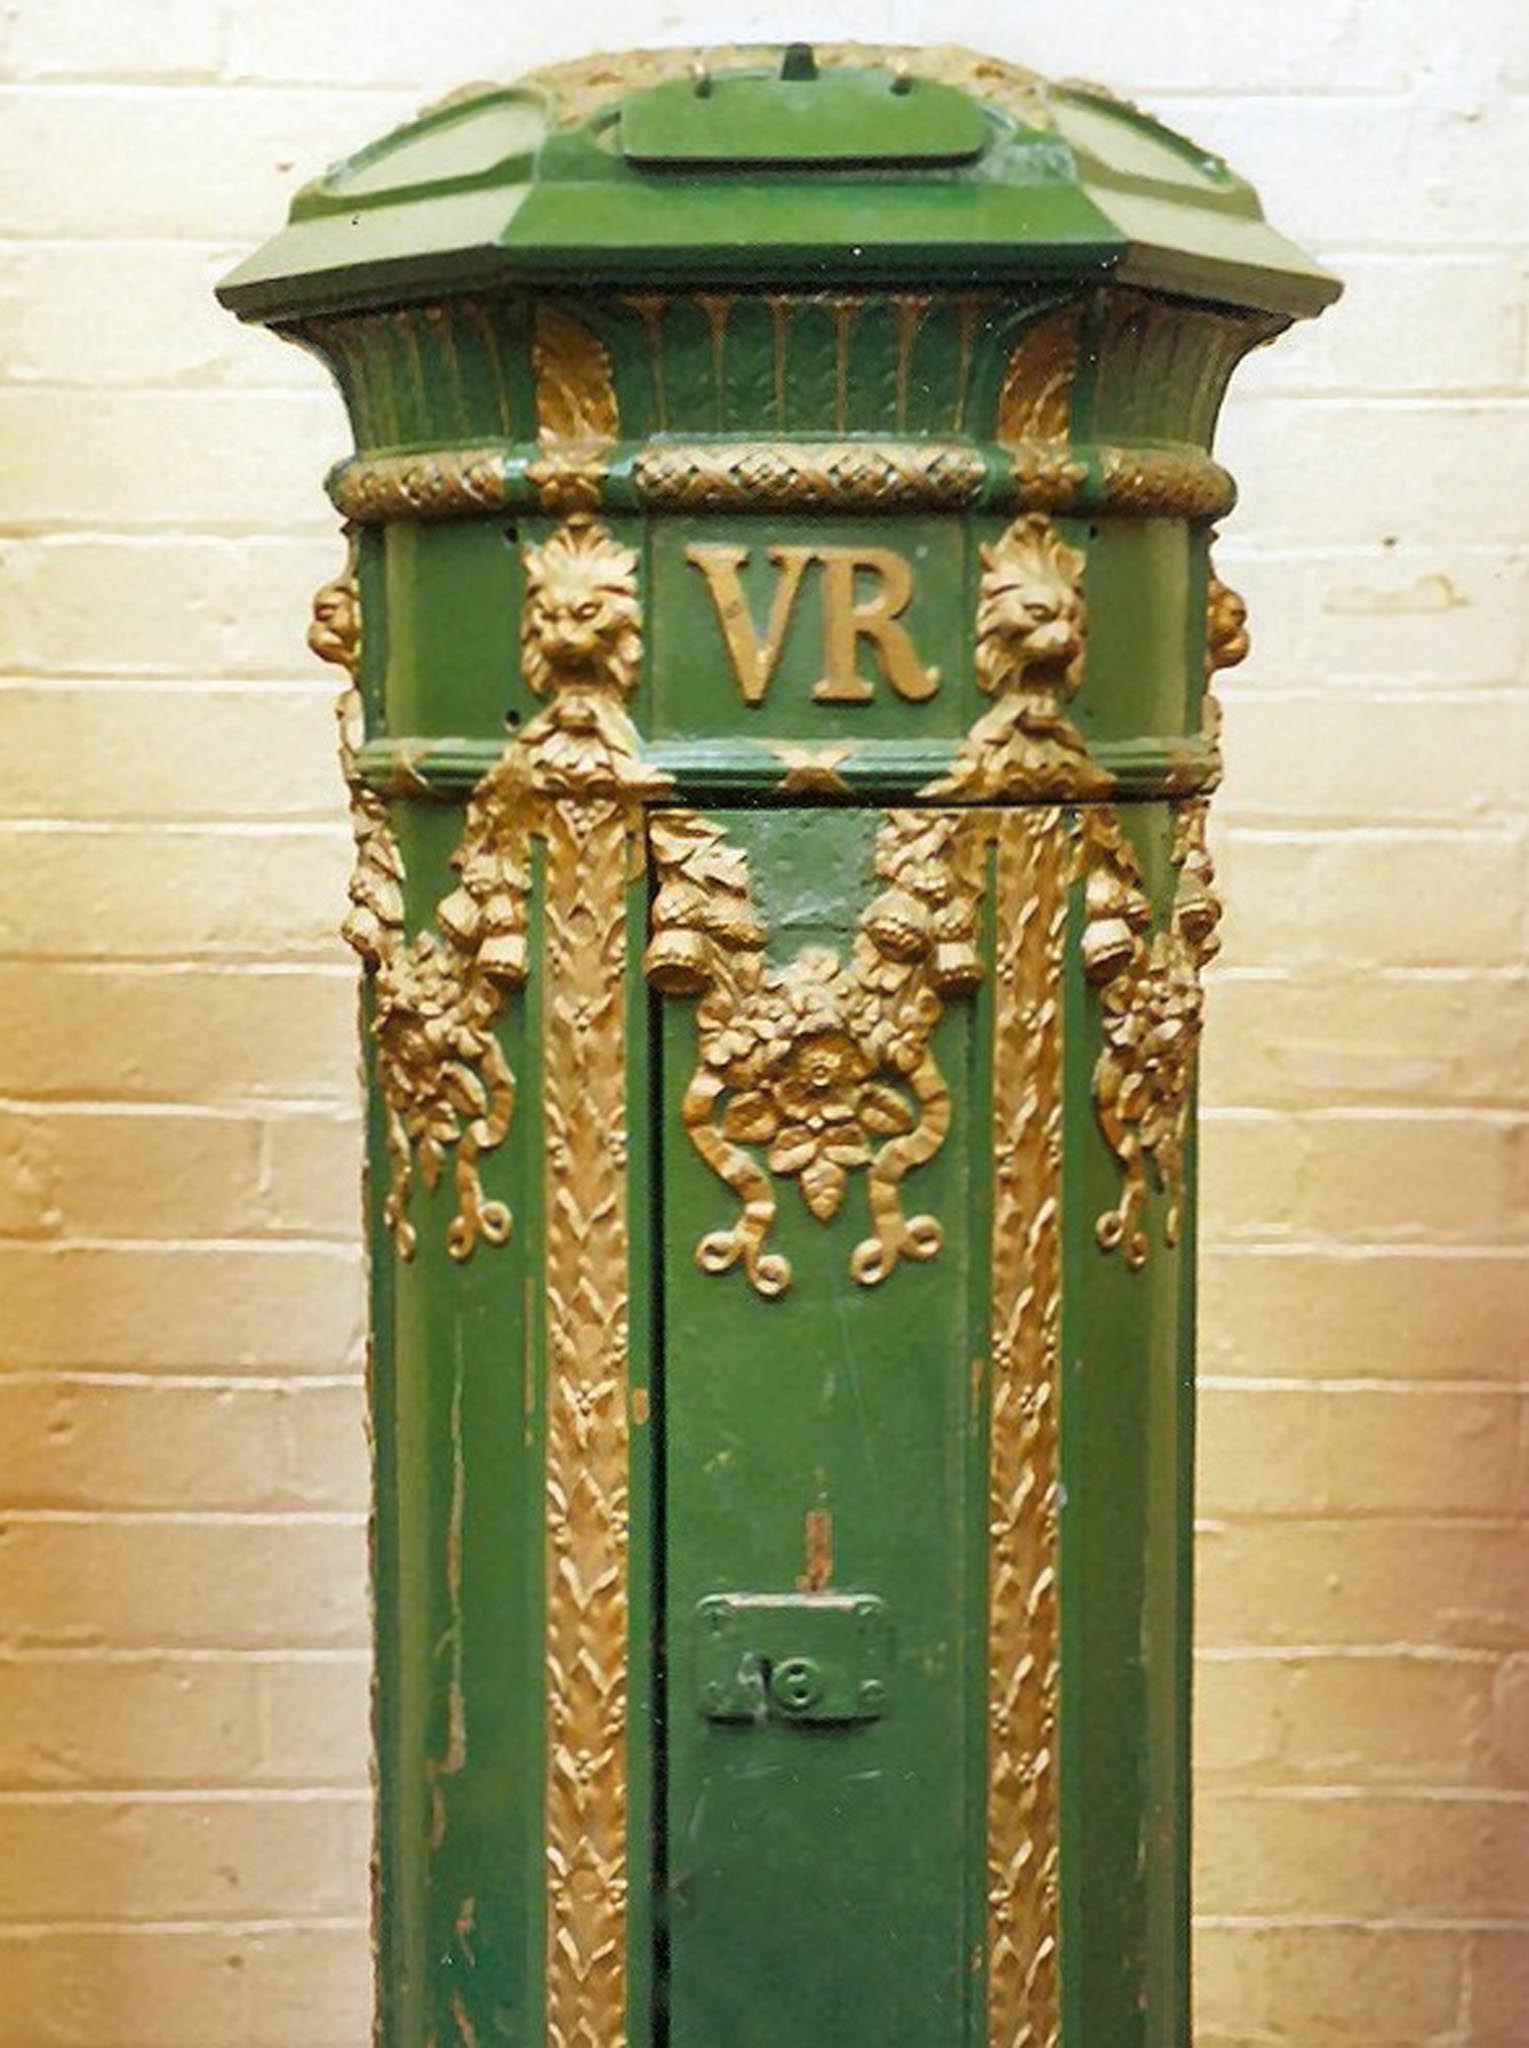 VR London Ornate pillar box, 1850s. Martin Robinson